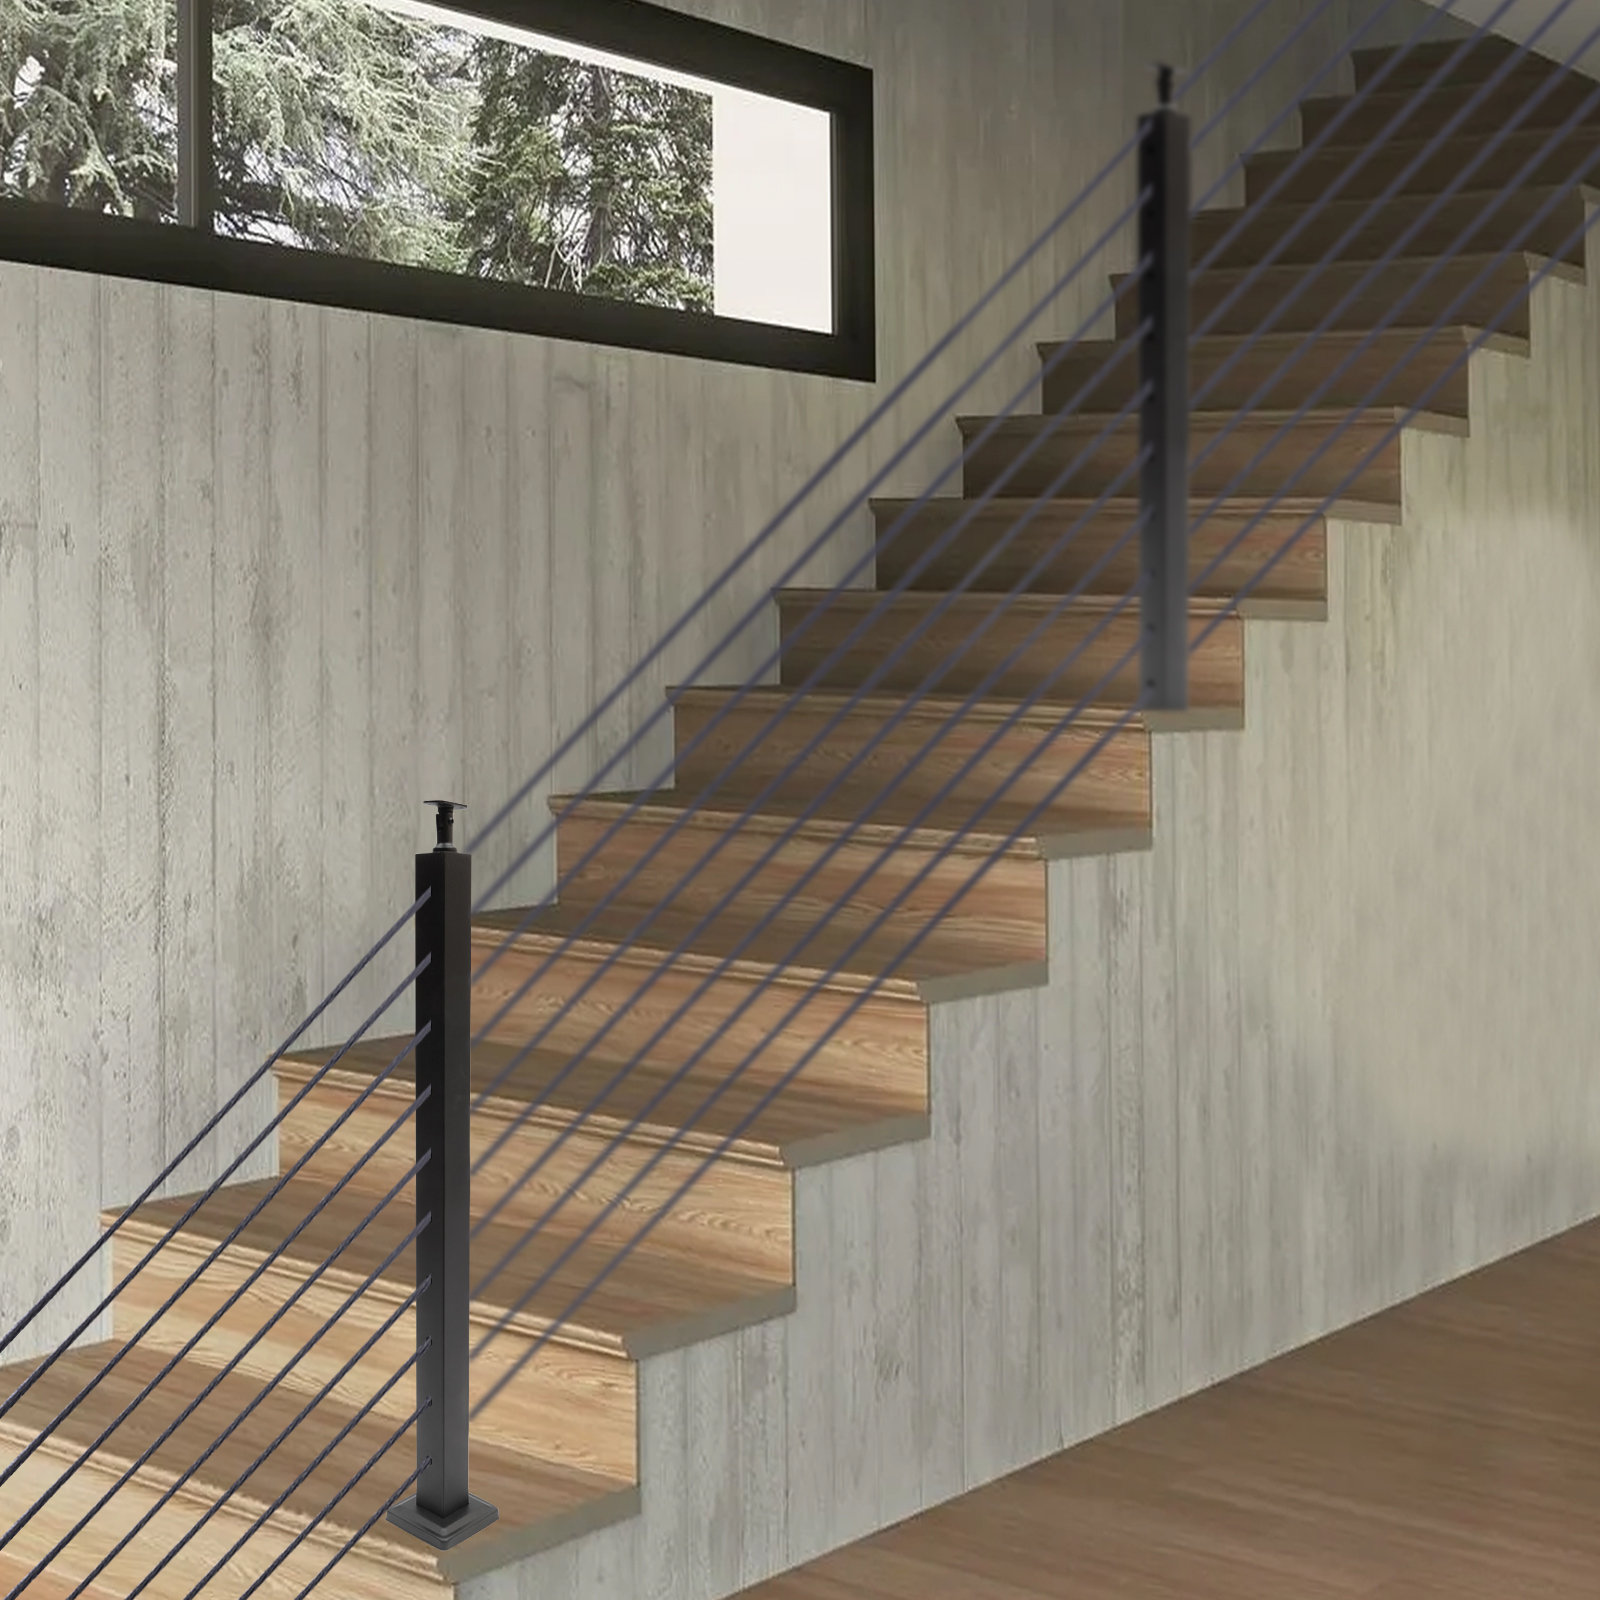 1.6'' H x 39.36'' W Black Metal Porch And Stair Railings